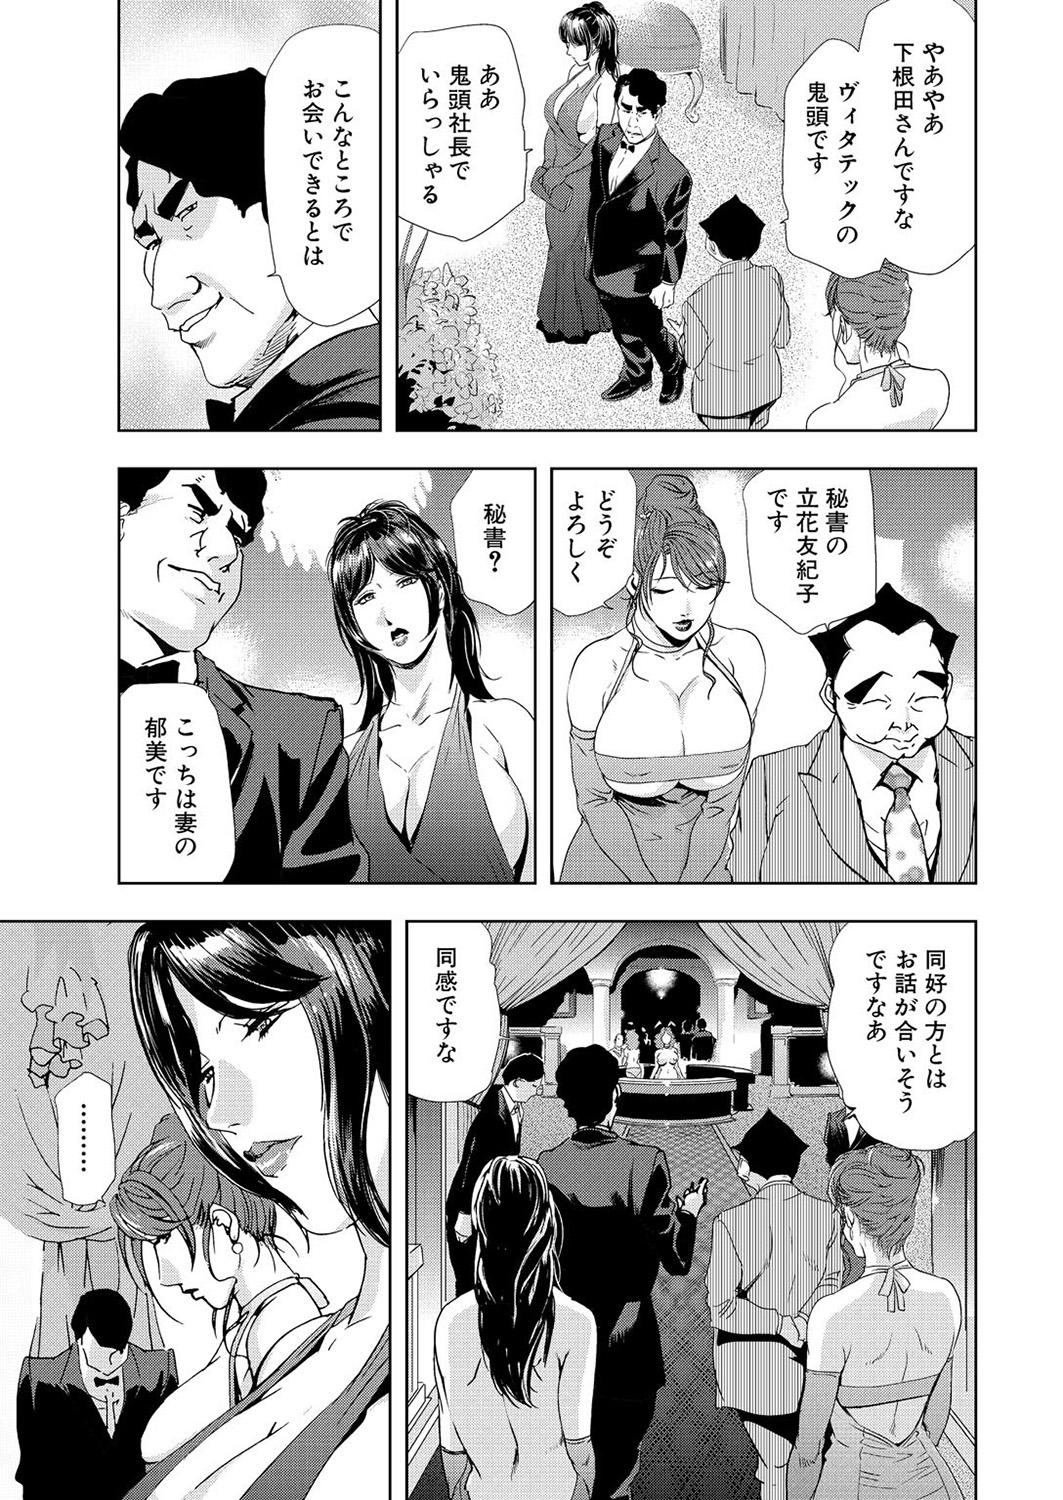 Old Nikuhisyo Yukiko 6 Police - Page 7